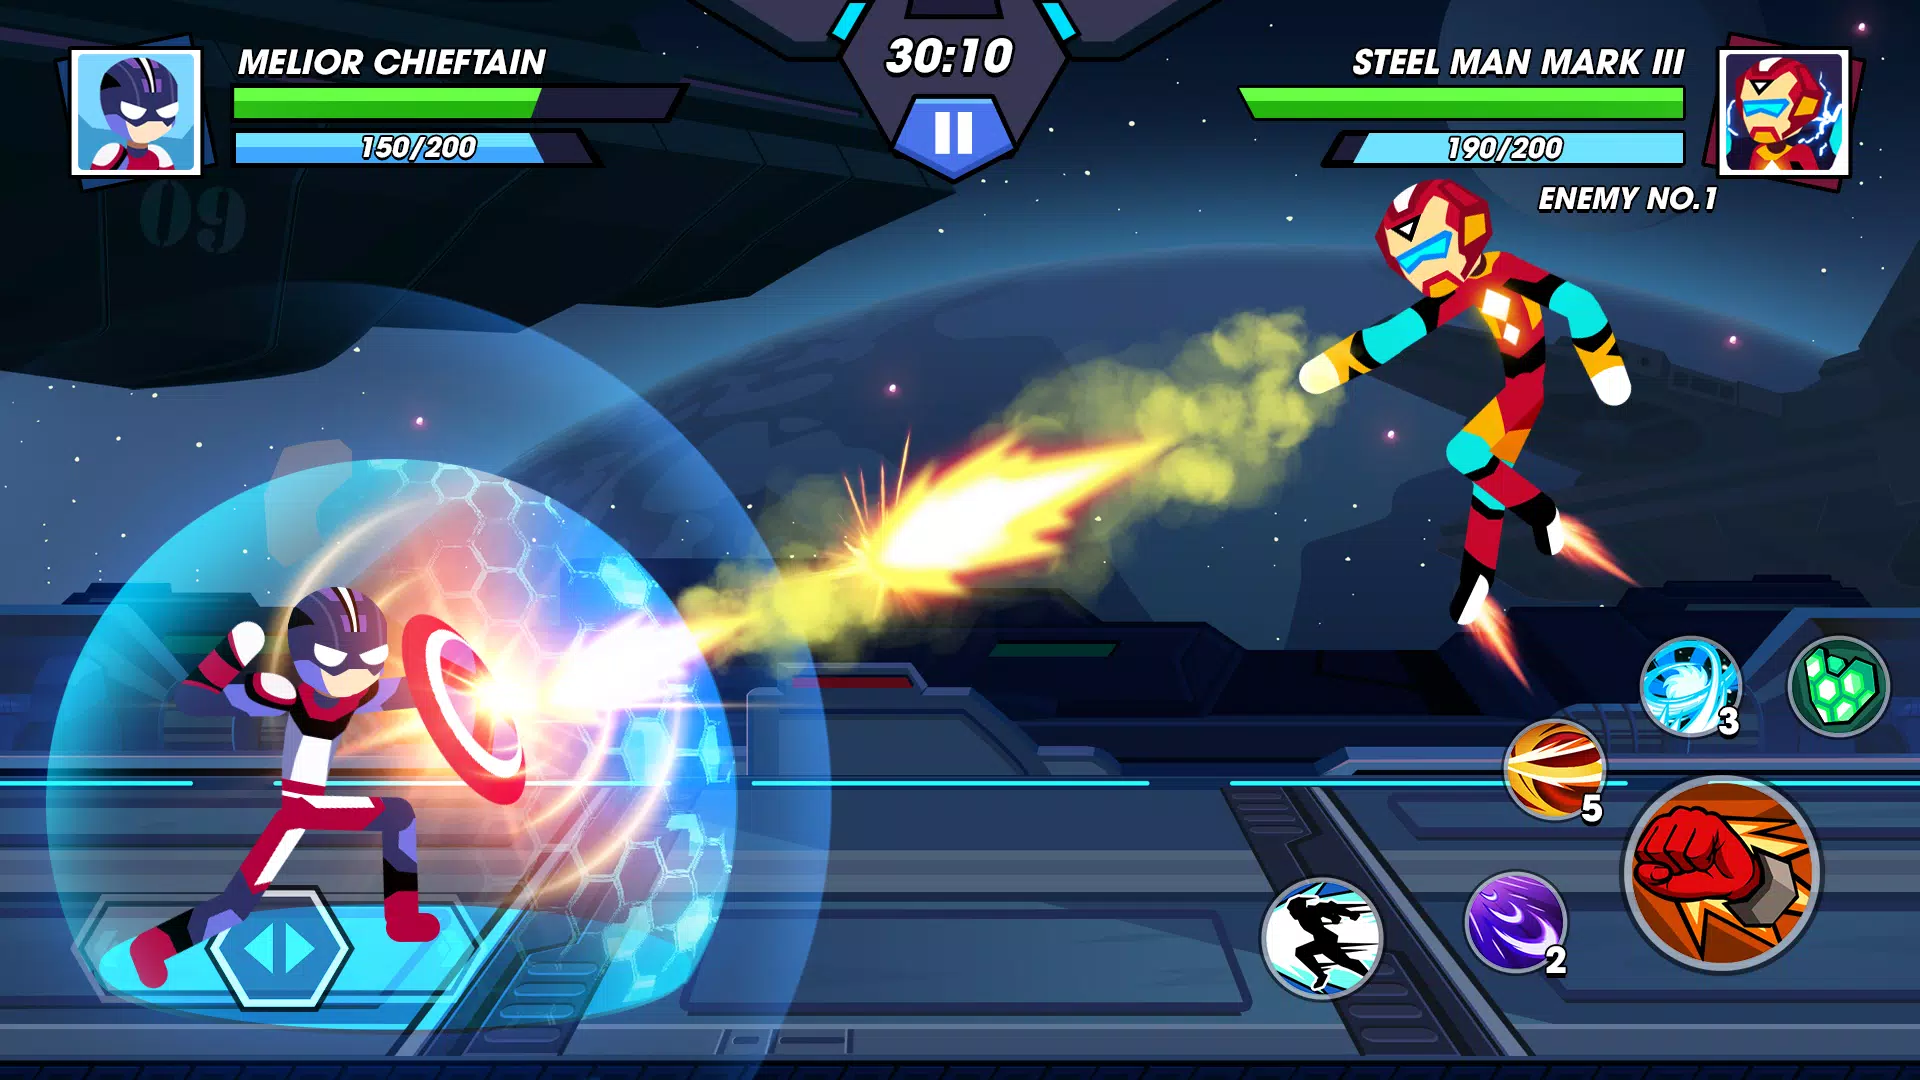 Stick Hero Stickman Smasher Apk Download for Android- Latest version 2.6-  com.gf.stickman.smash.infinity.stick.fighter